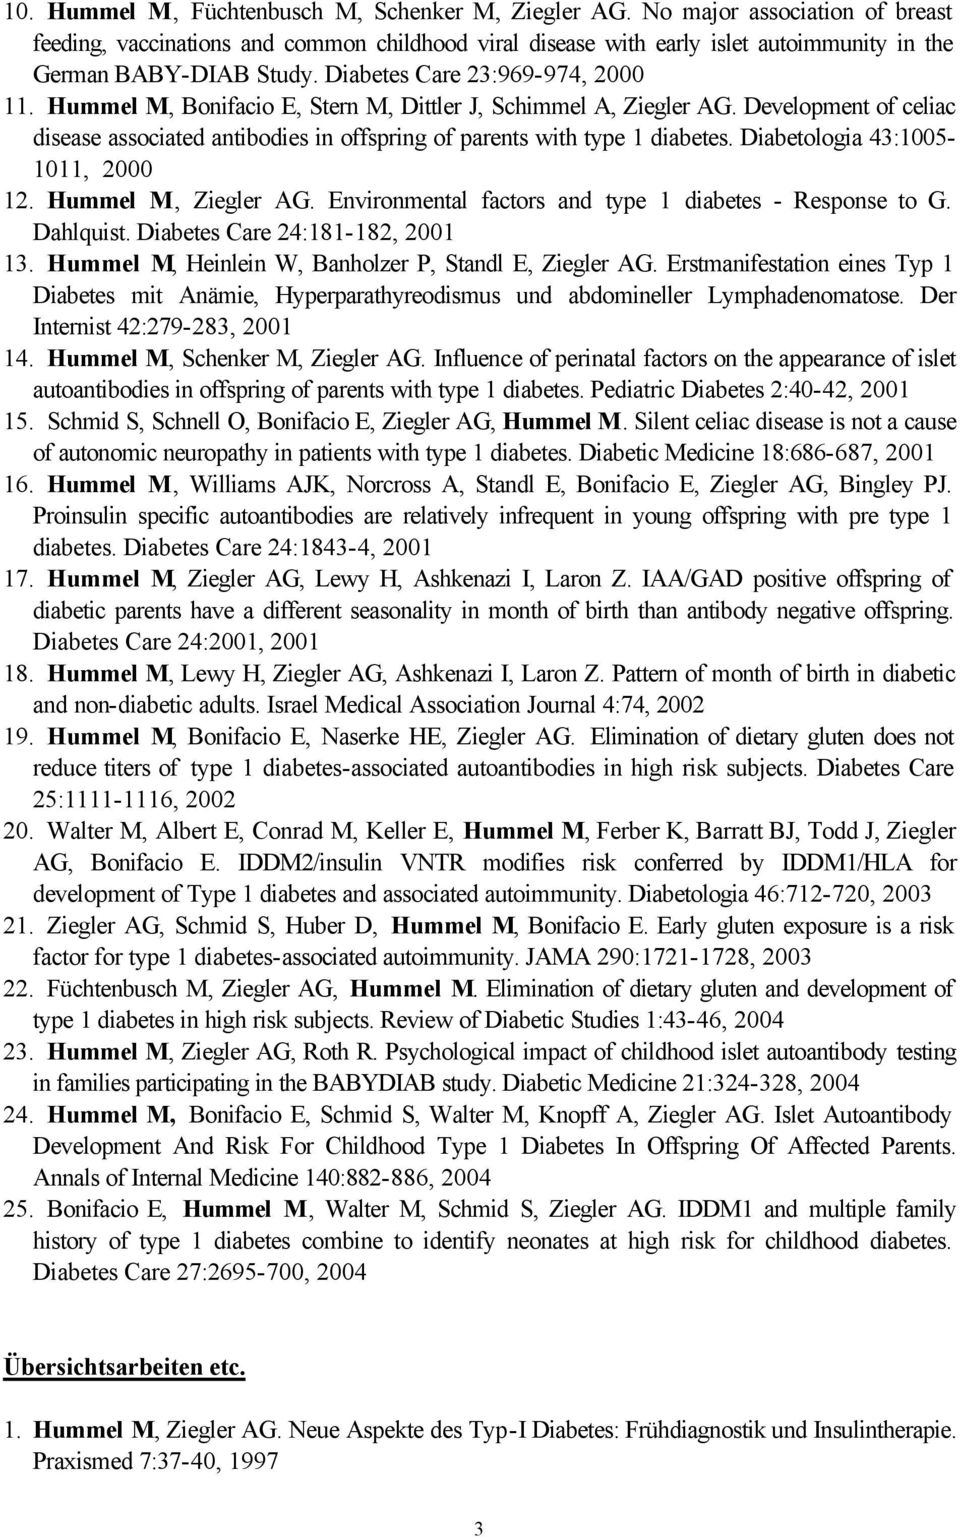 Hummel M, Bonifacio E, Stern M, Dittler J, Schimmel A, Ziegler AG. Development of celiac disease associated antibodies in offspring of parents with type 1 diabetes. Diabetologia 43:1005-1011, 2000 12.